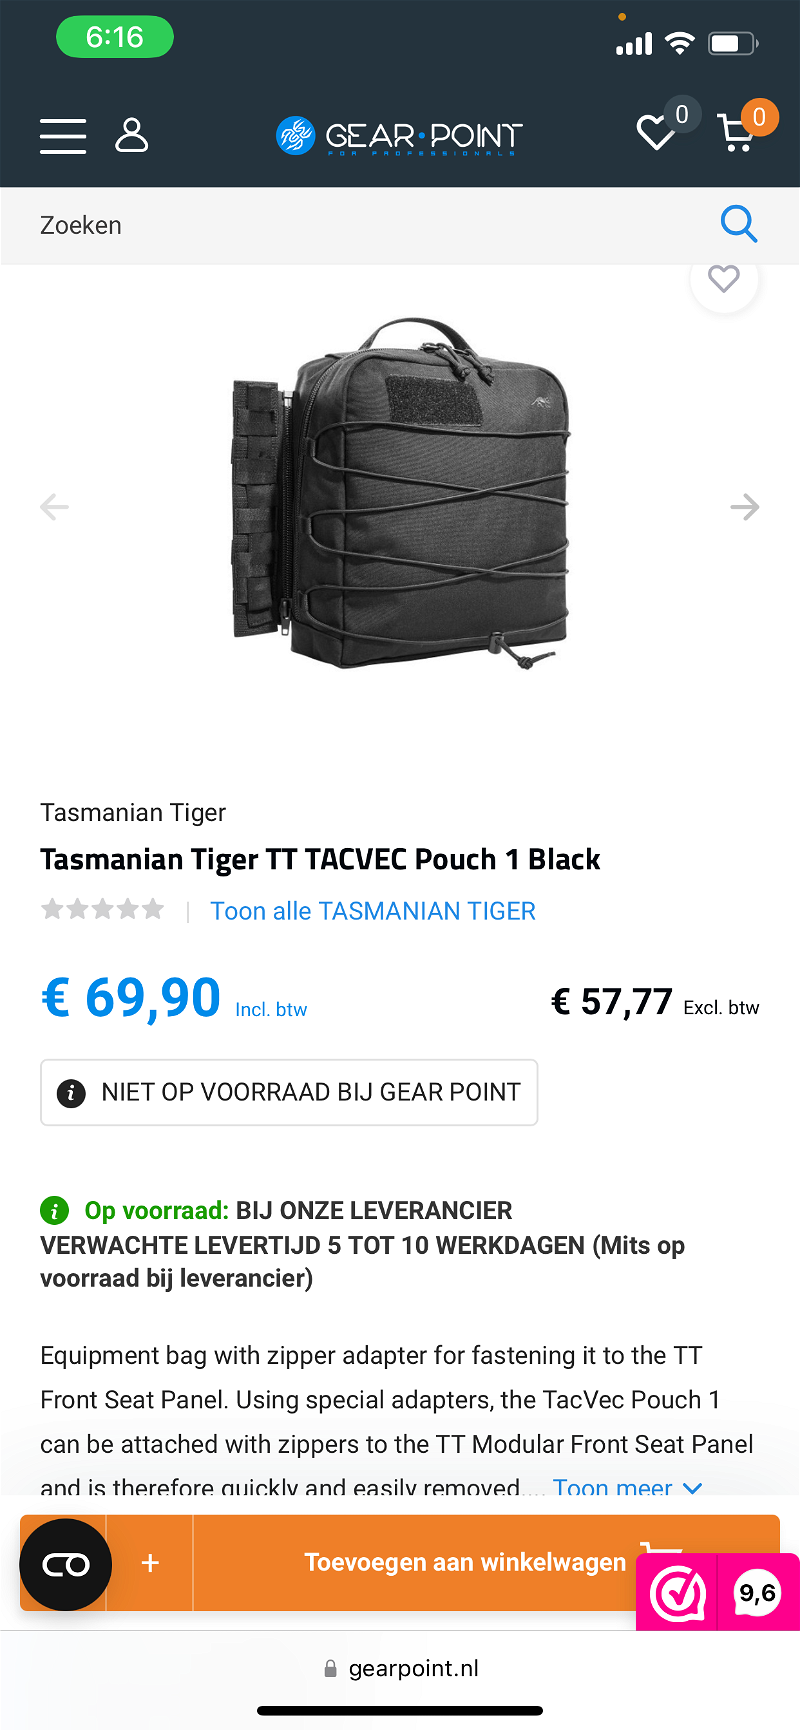 Image 1 for Tasmanian tiger tacvech pouch 1 prijs inclusief verzending